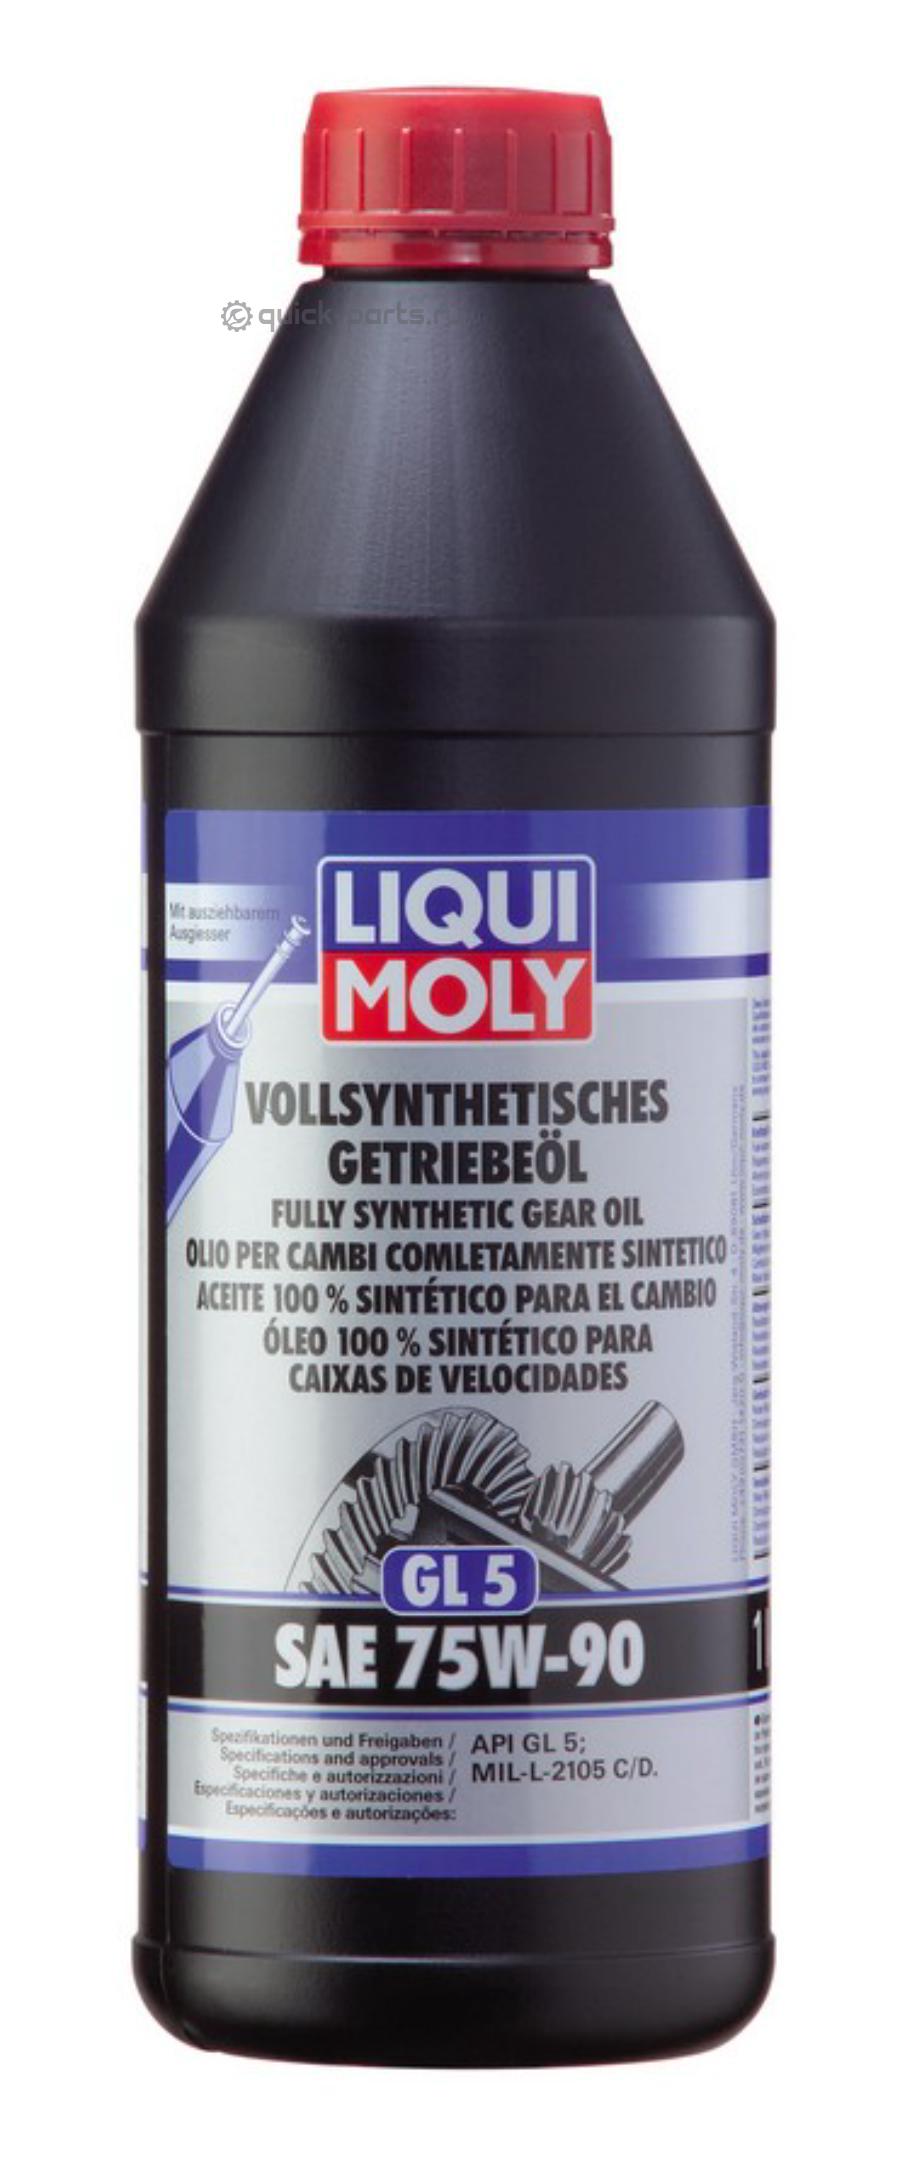 1950 LIQUI MOLY Синтетическое трансмиссионное масло Vollsynthetisches Getriebeoil 75W-90